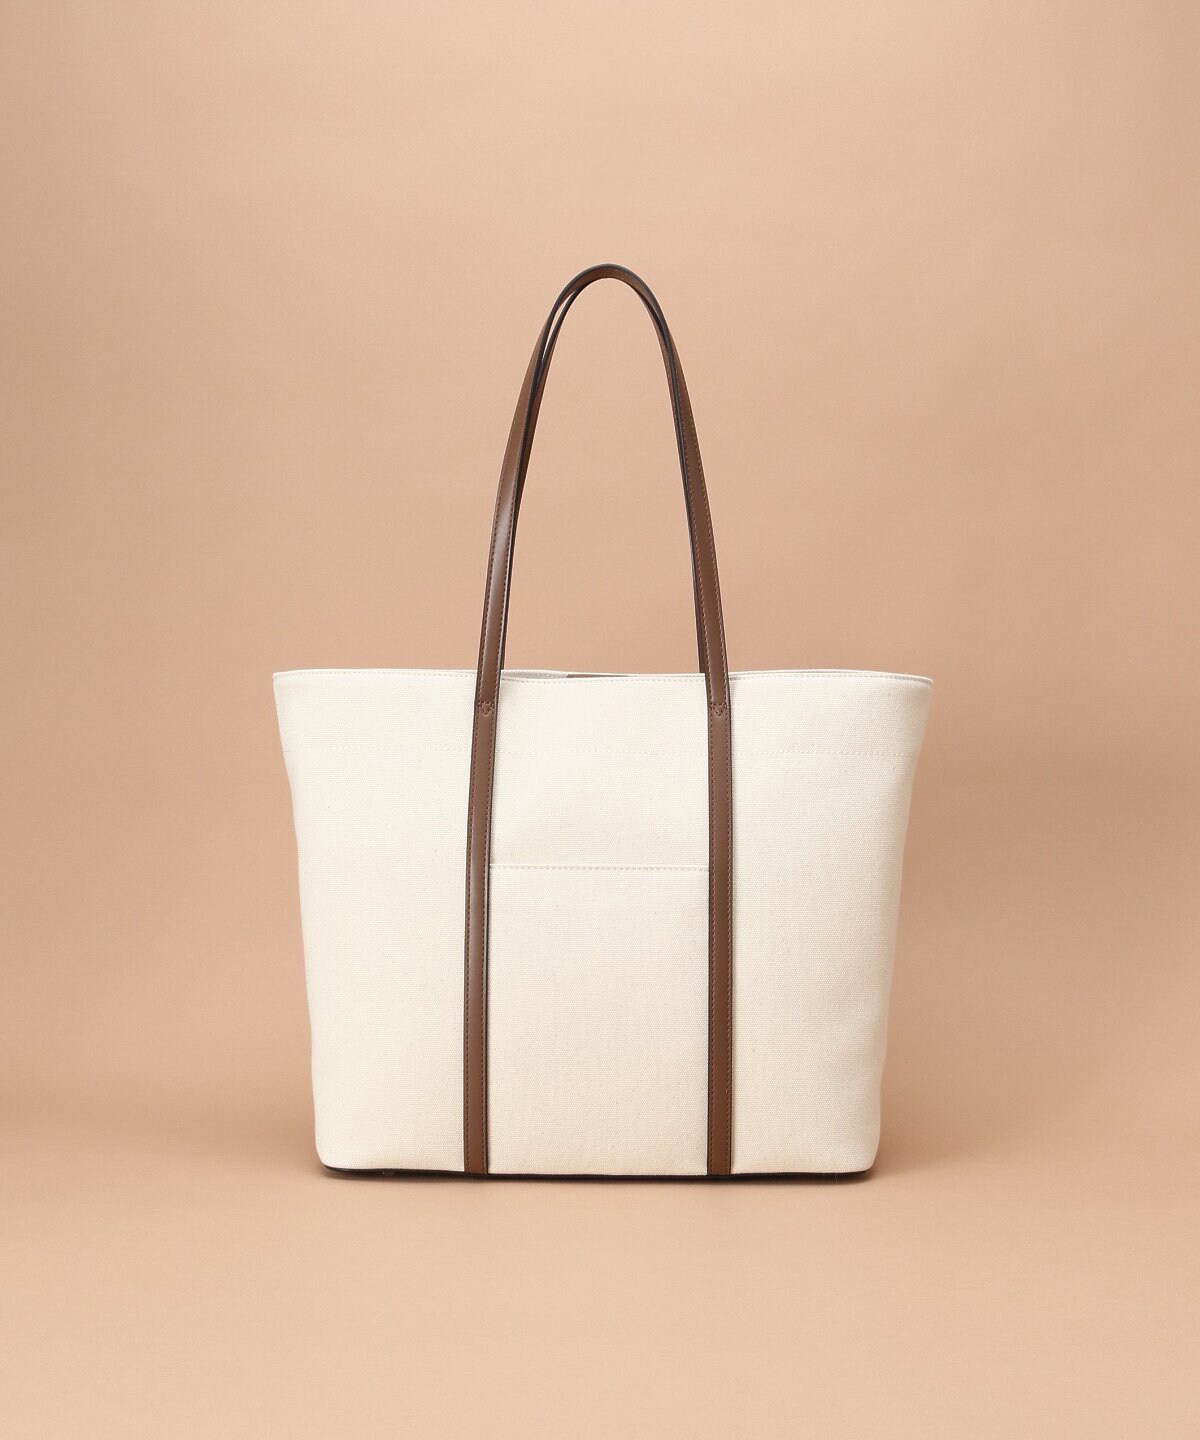 Dream bag for トートバッグ Ⅱ